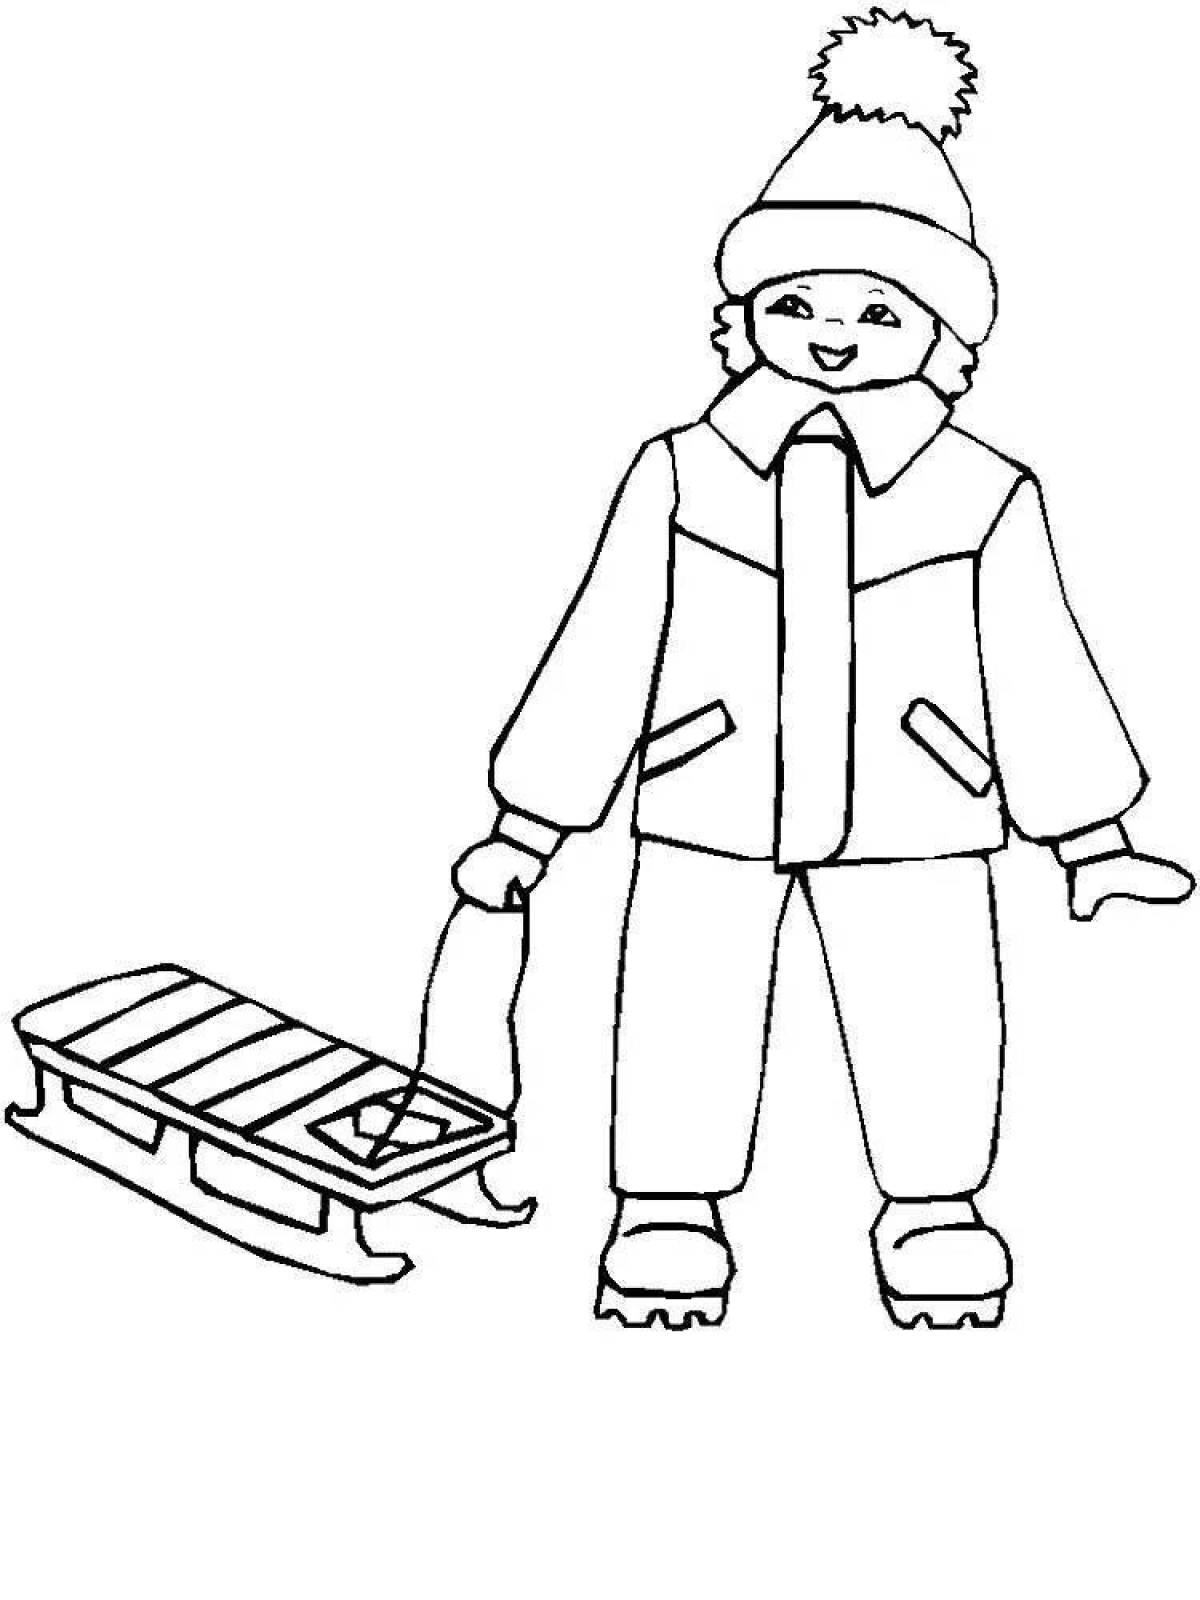 Snug coloring page boy in winter clothes